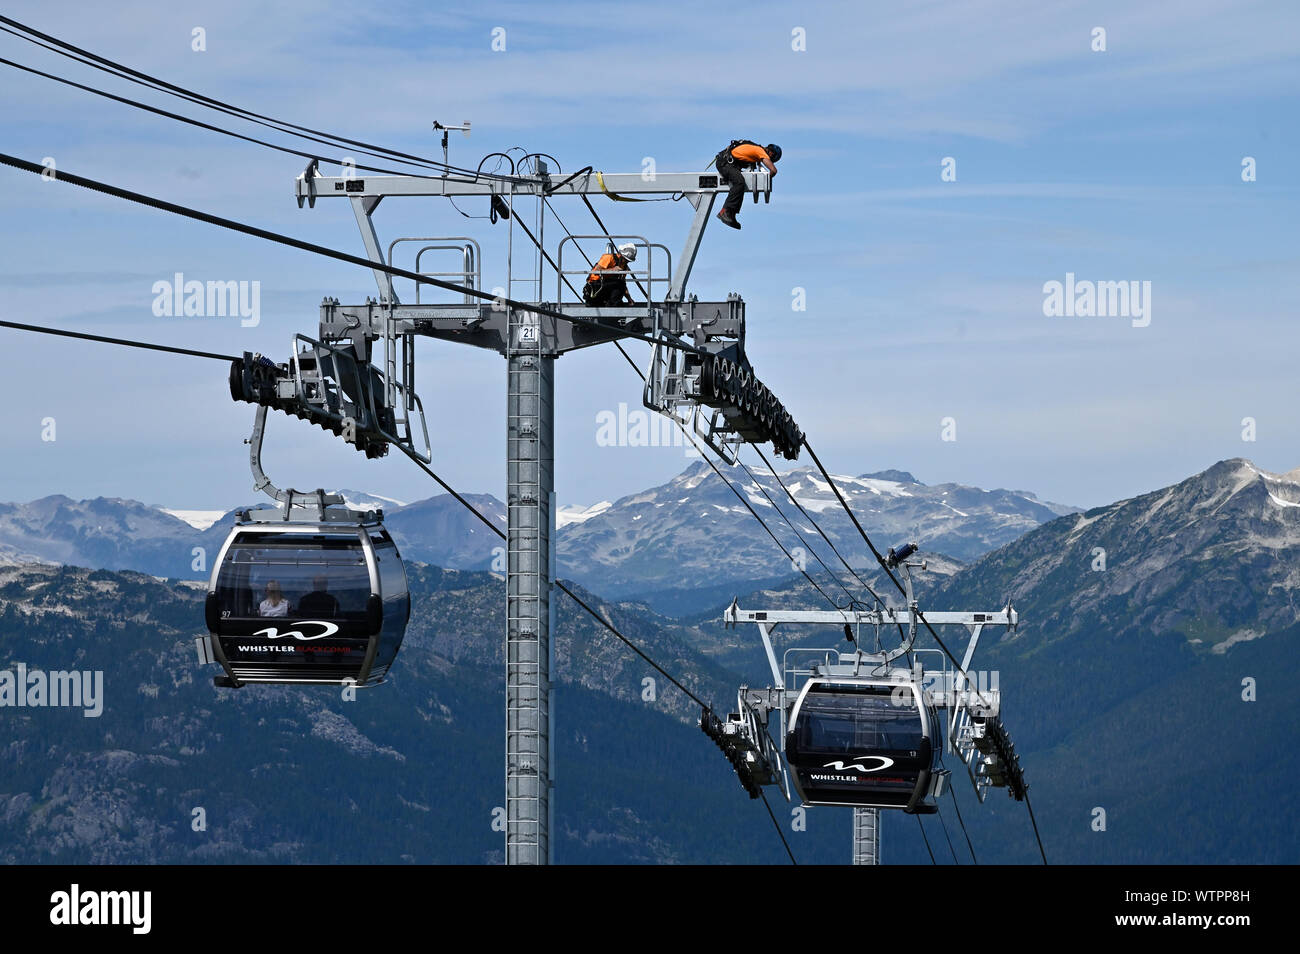 Two men working on ski lift towers, Whistler, B.C Canada. Stock Photo